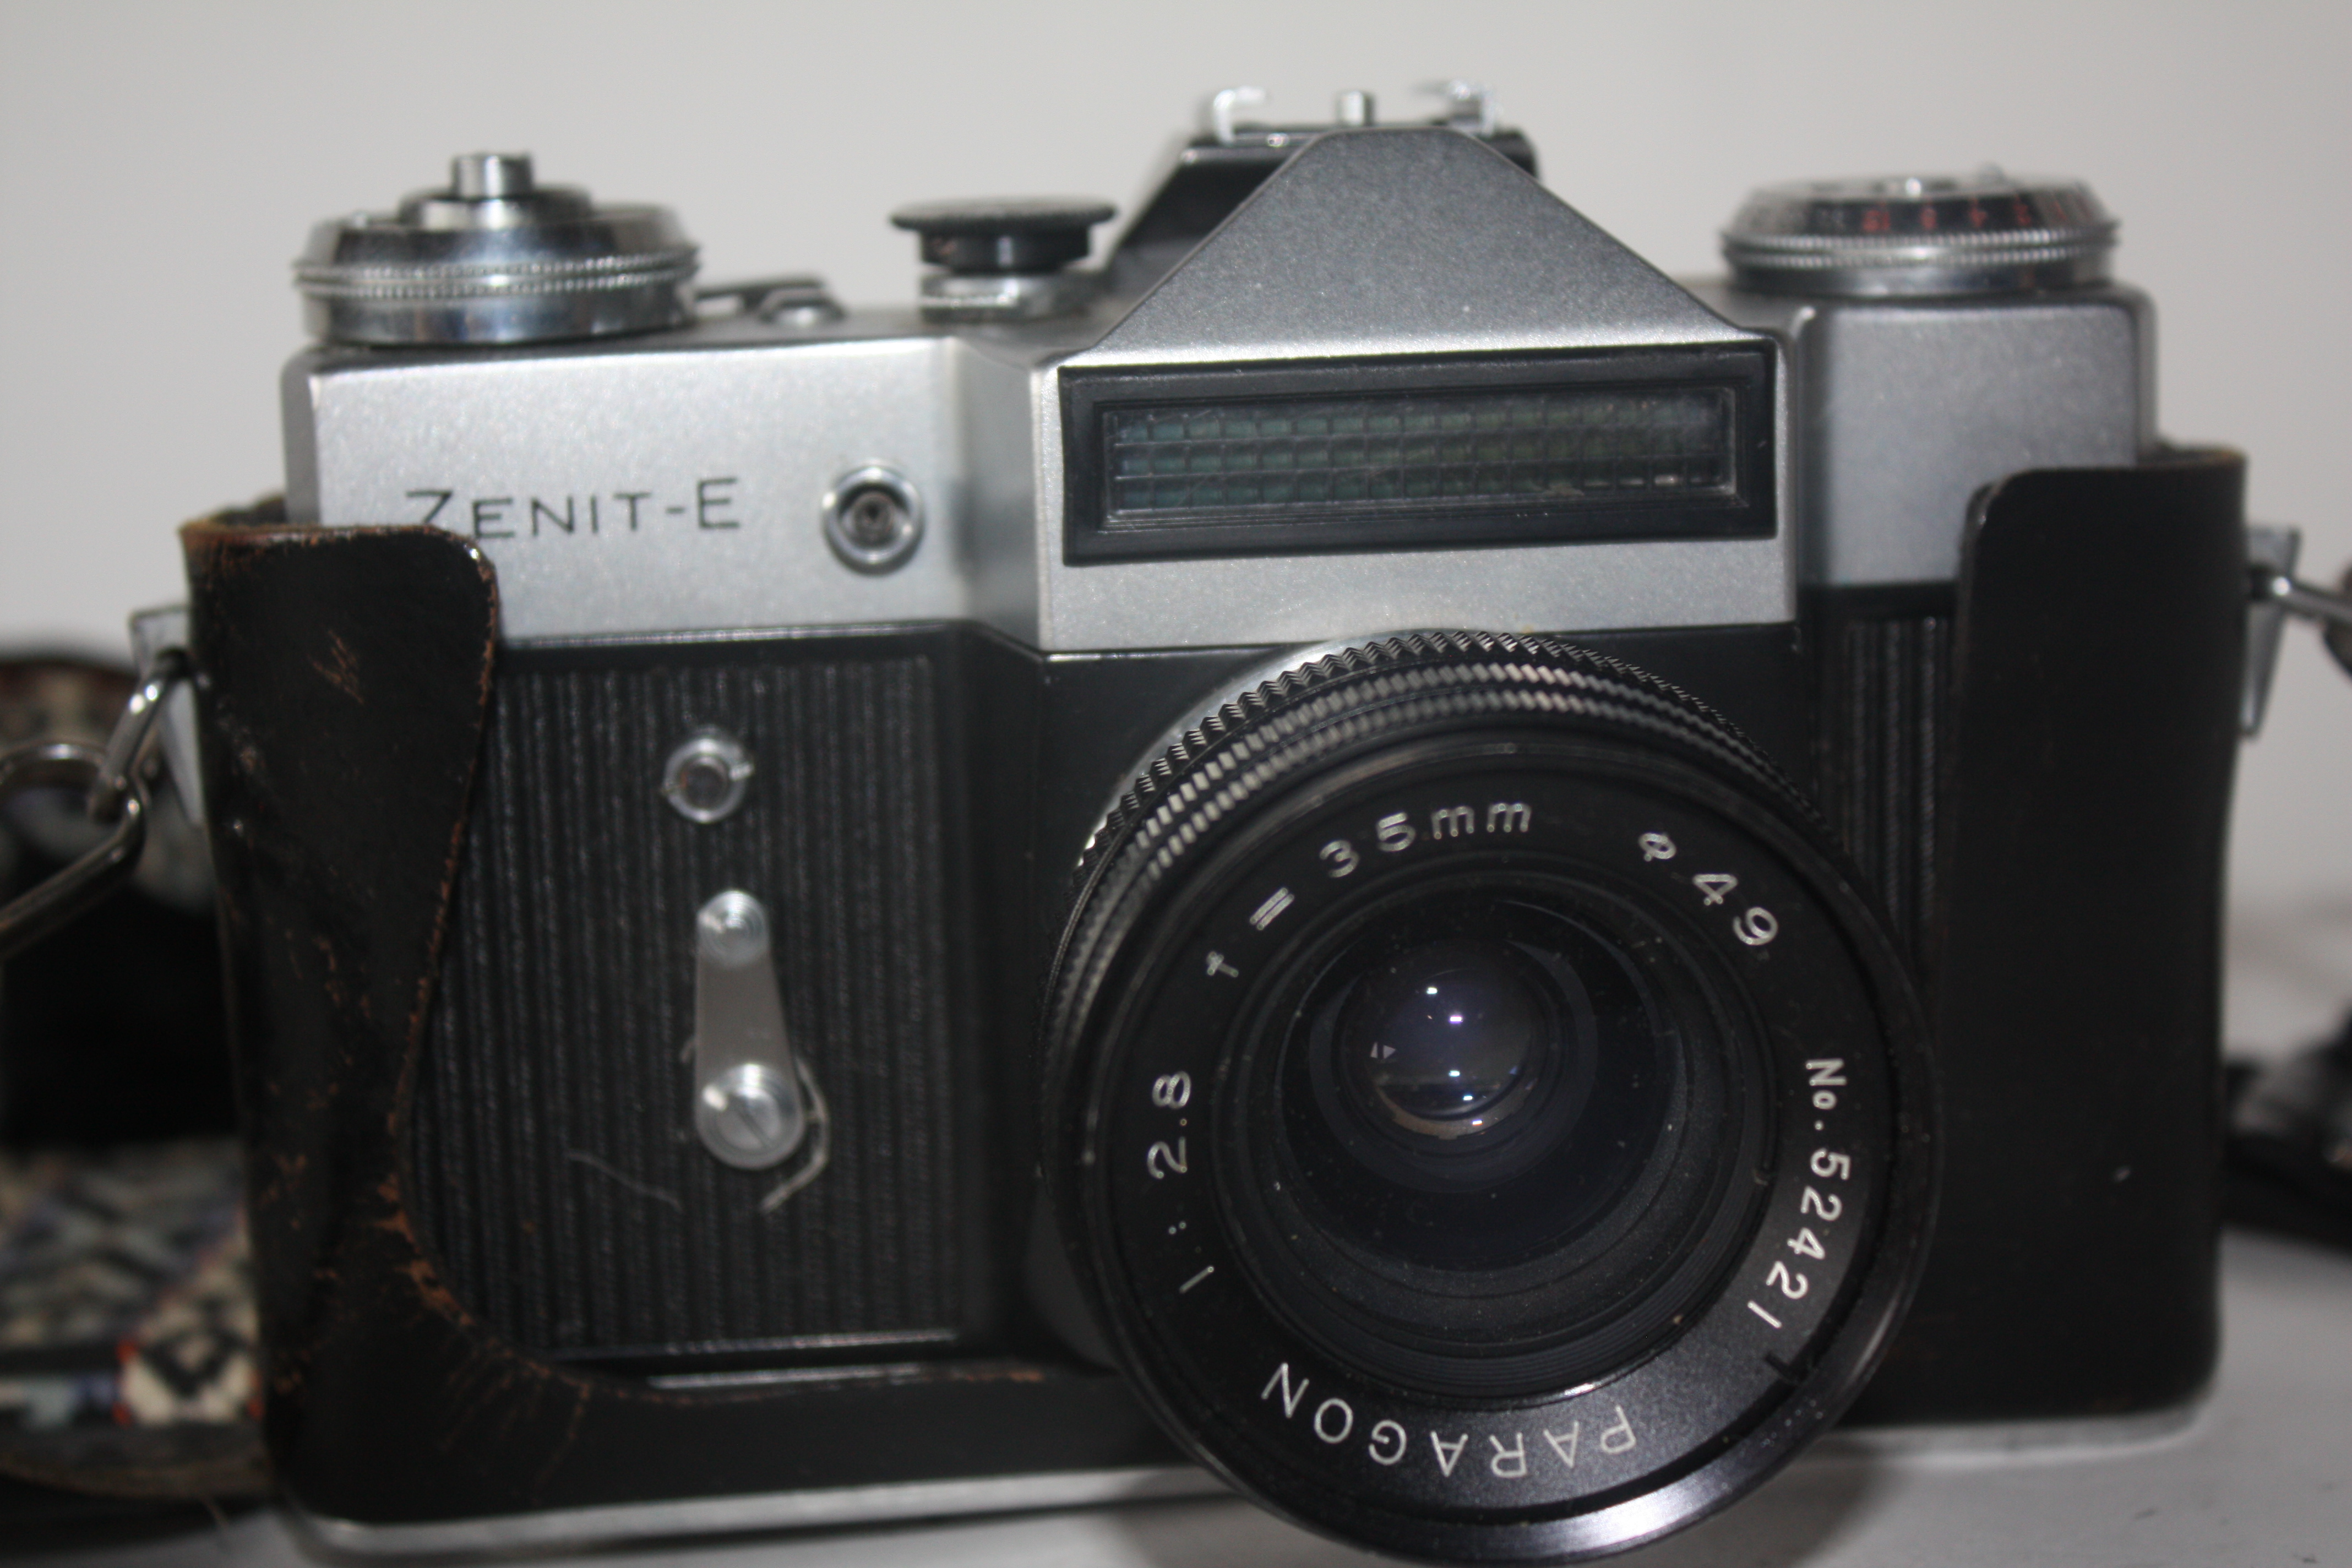 Zenit-E film camera